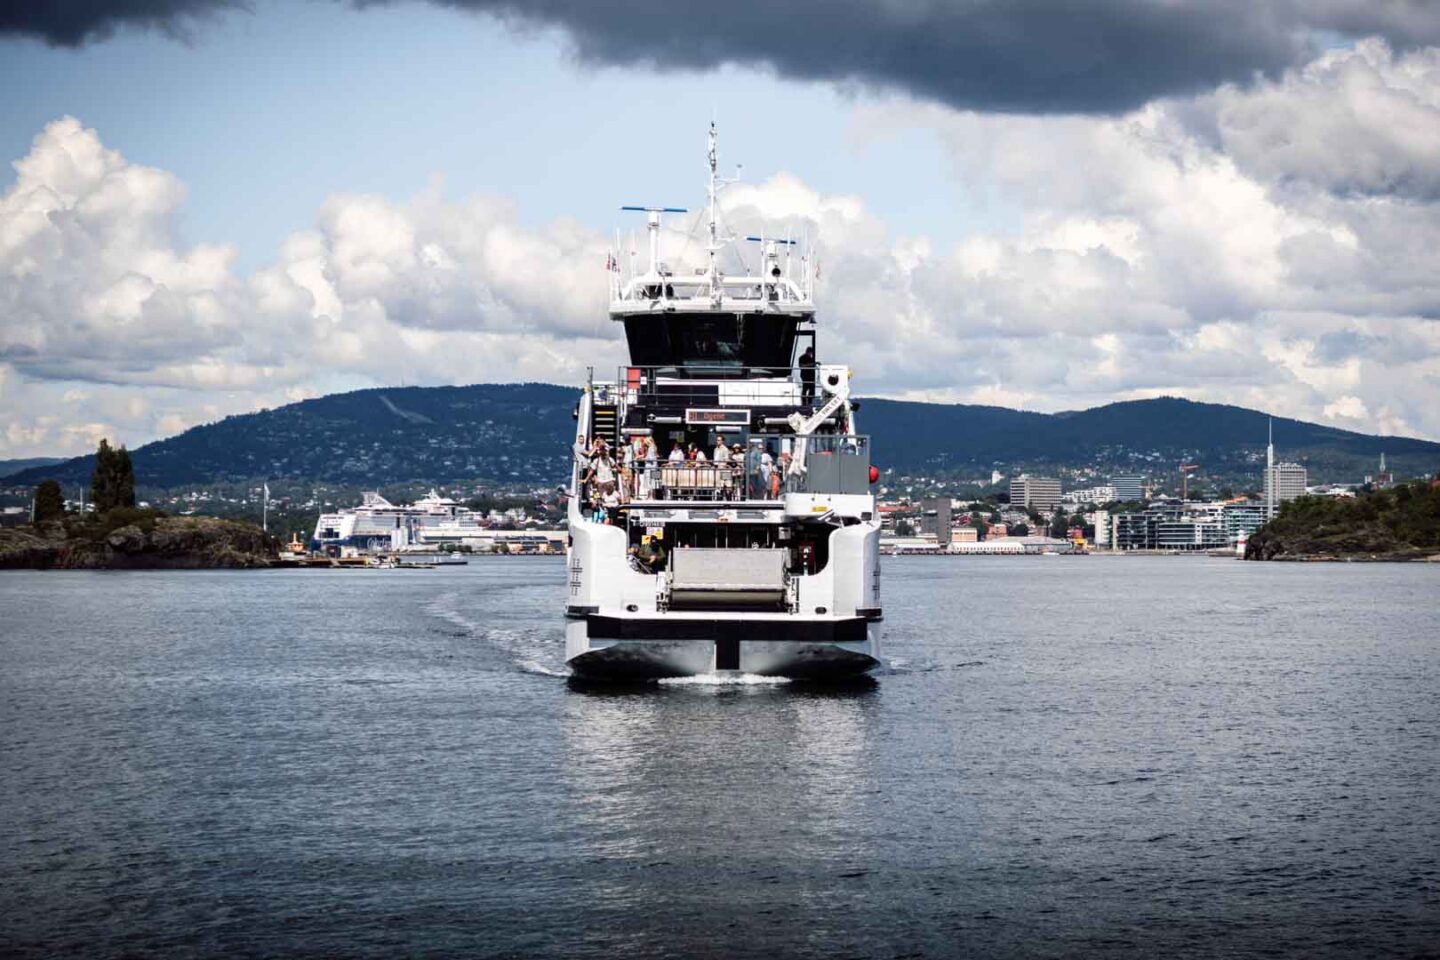 The Oslofjord ferry service